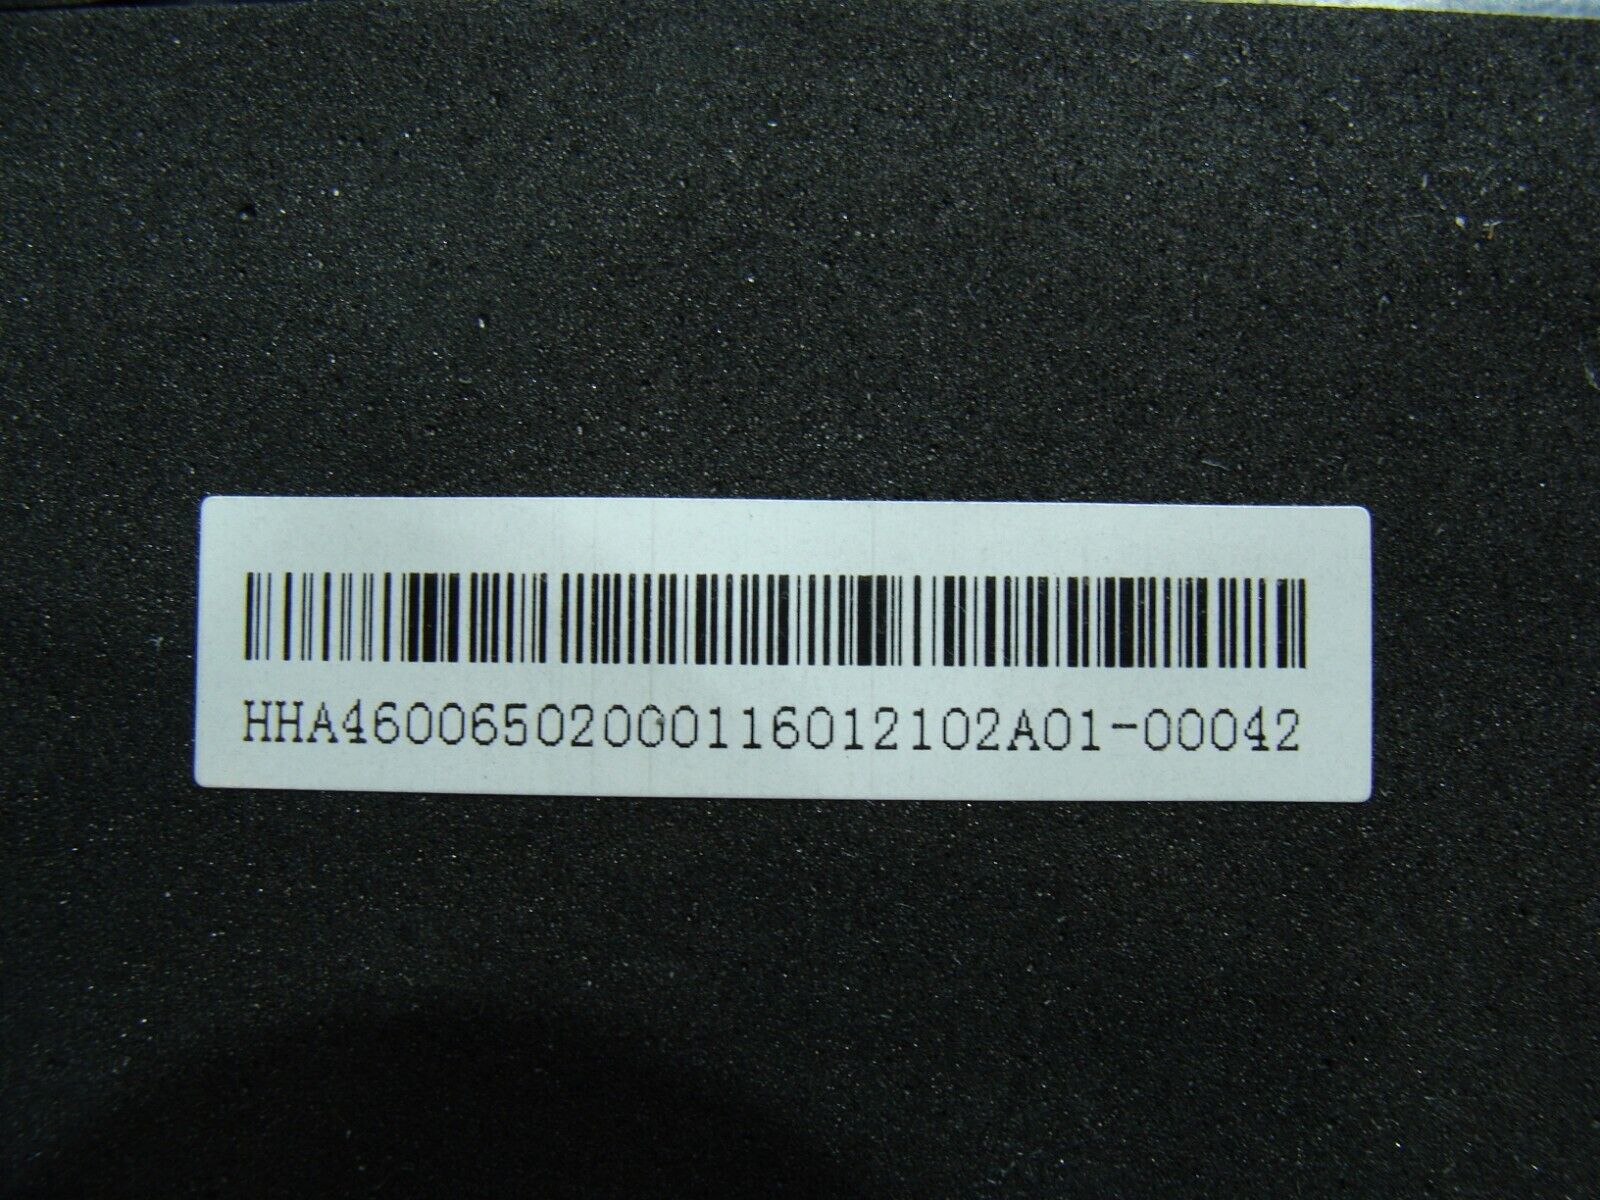 Acer Aspire R3-131T-C1YF 11.6